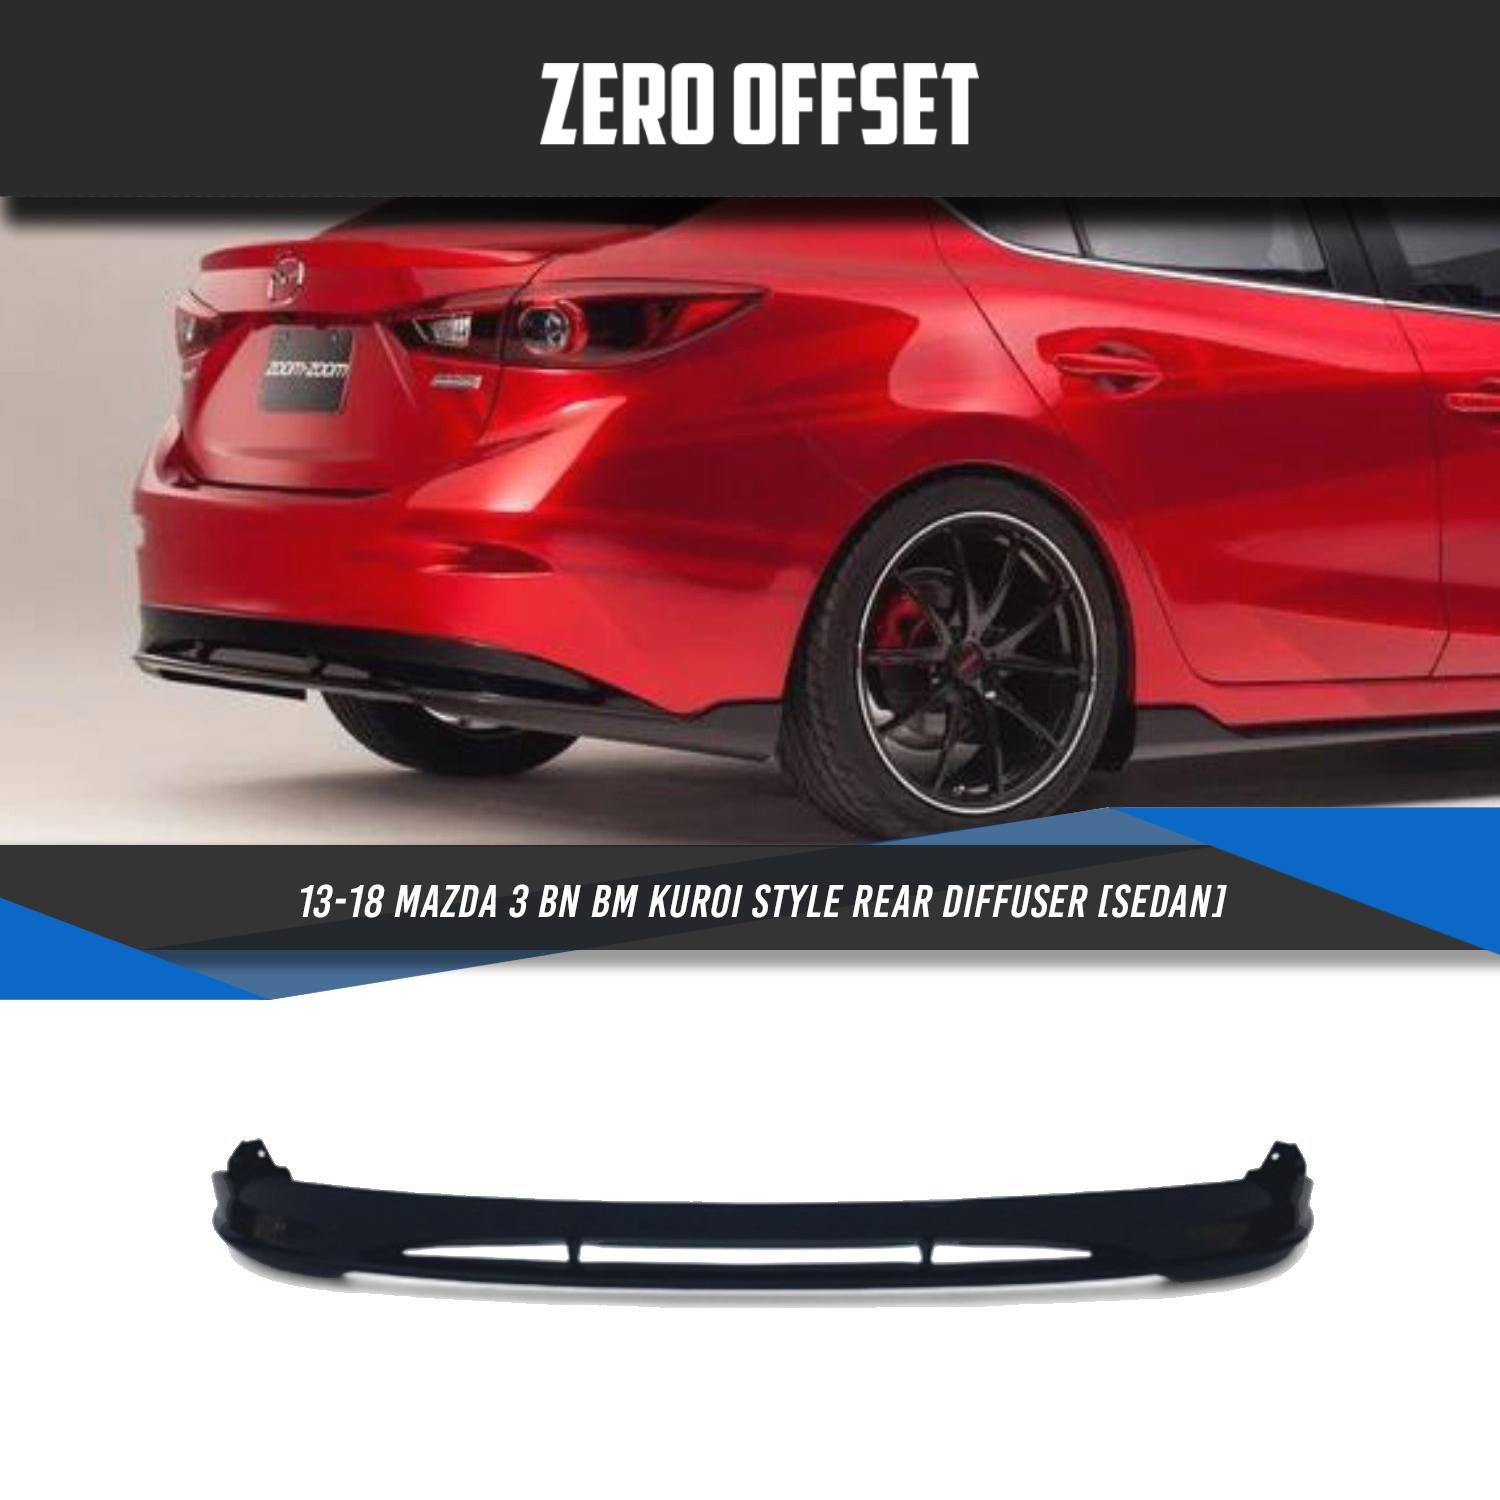 Zero Offset Kuroi Style Rear Diffuser for 13-18 Mazda 3 BN/BM (Sedan)